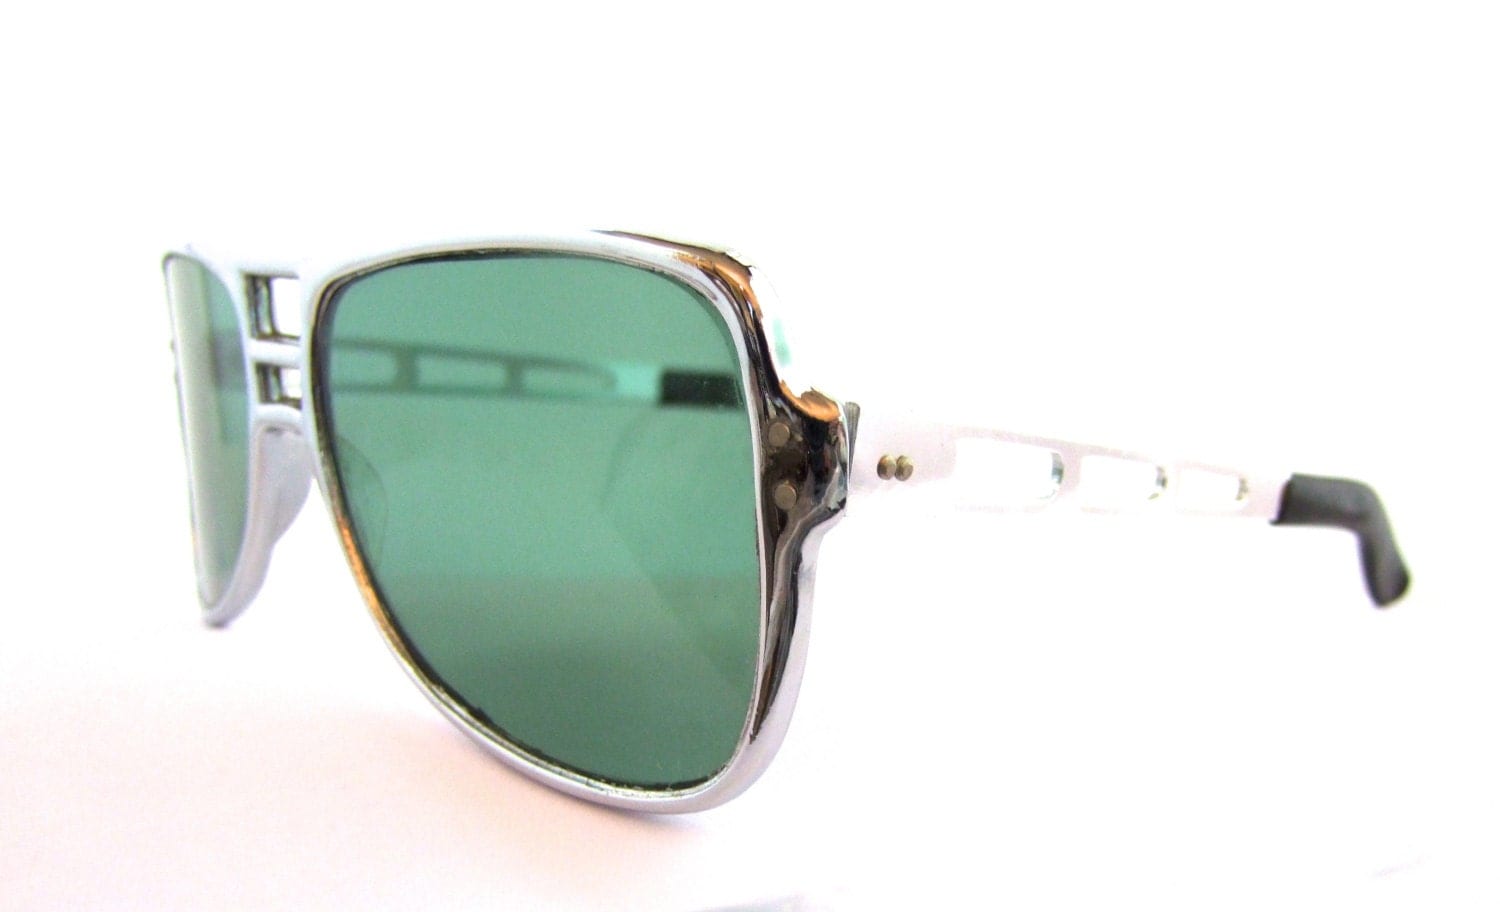 70s Elvis Presley style mirrored Aviator Sunglasses